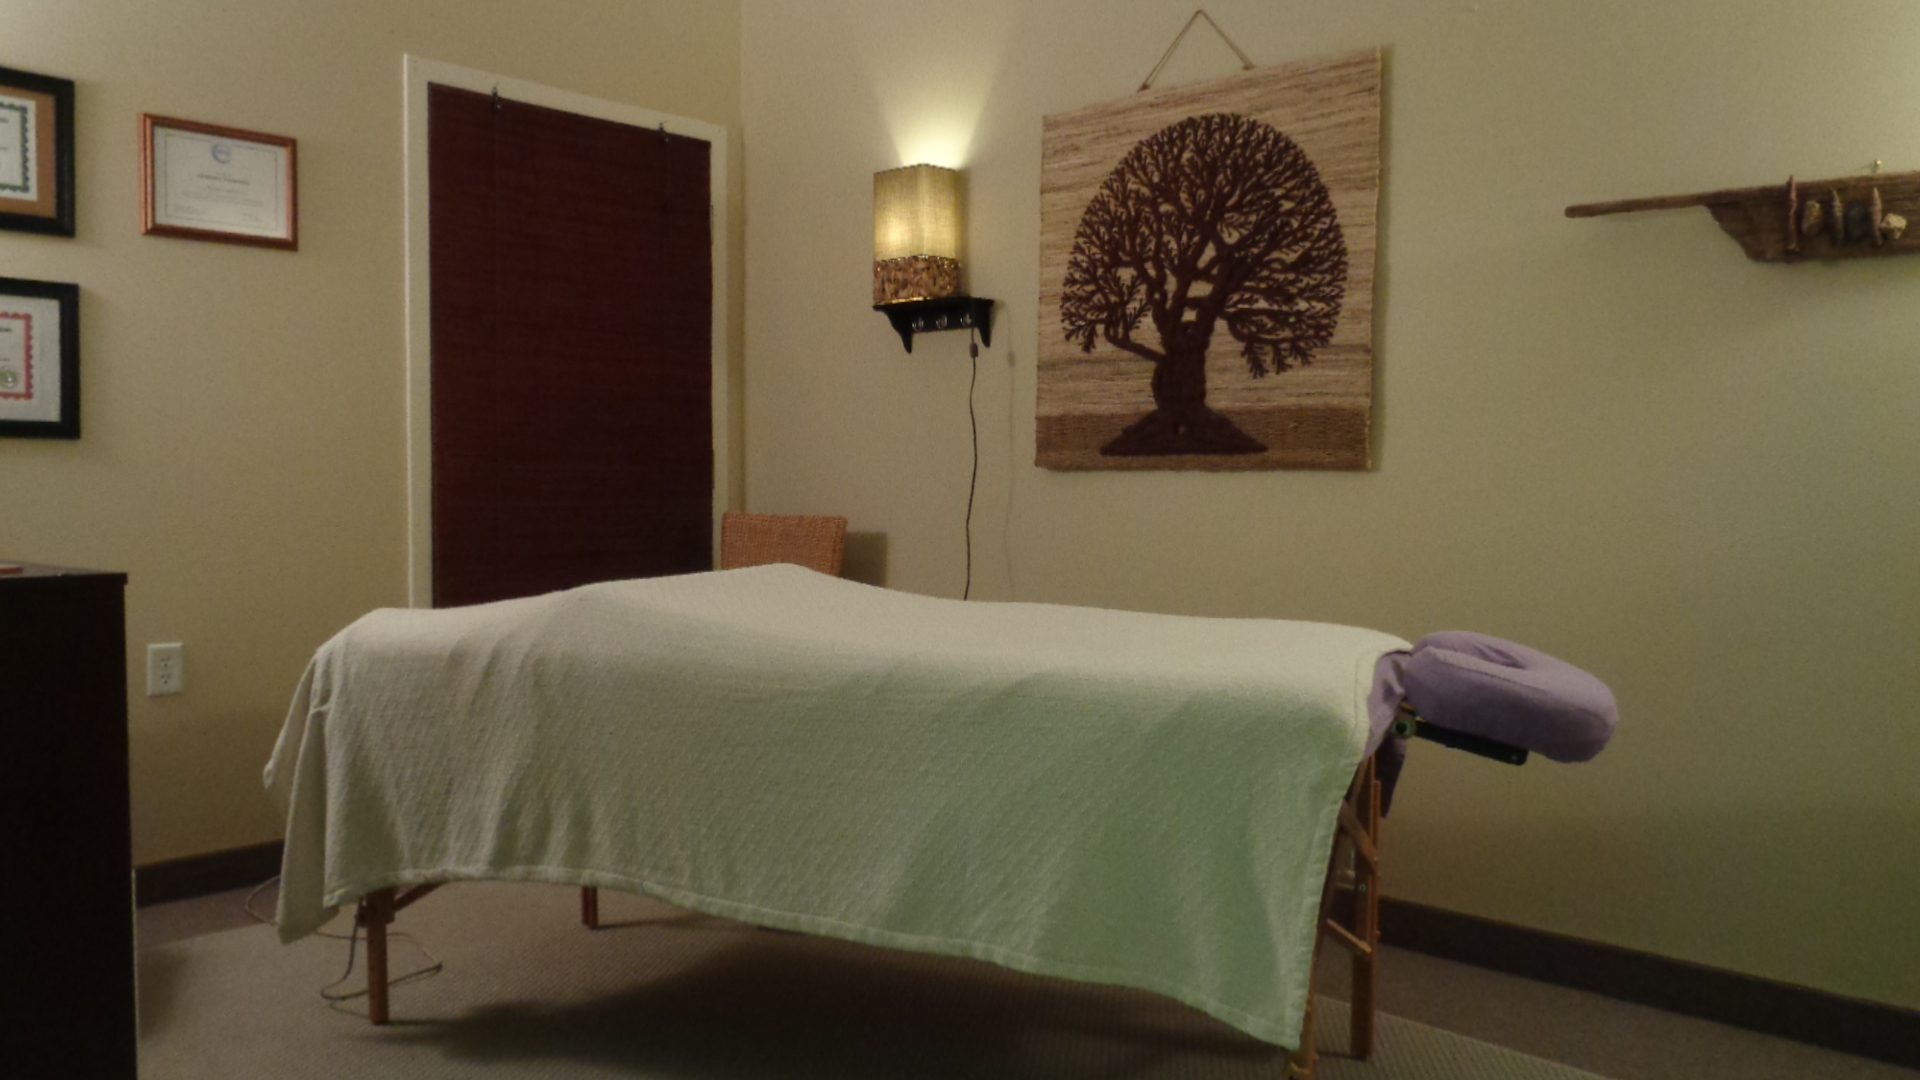 Alexandre Pazmandy massage therapy and bodywork